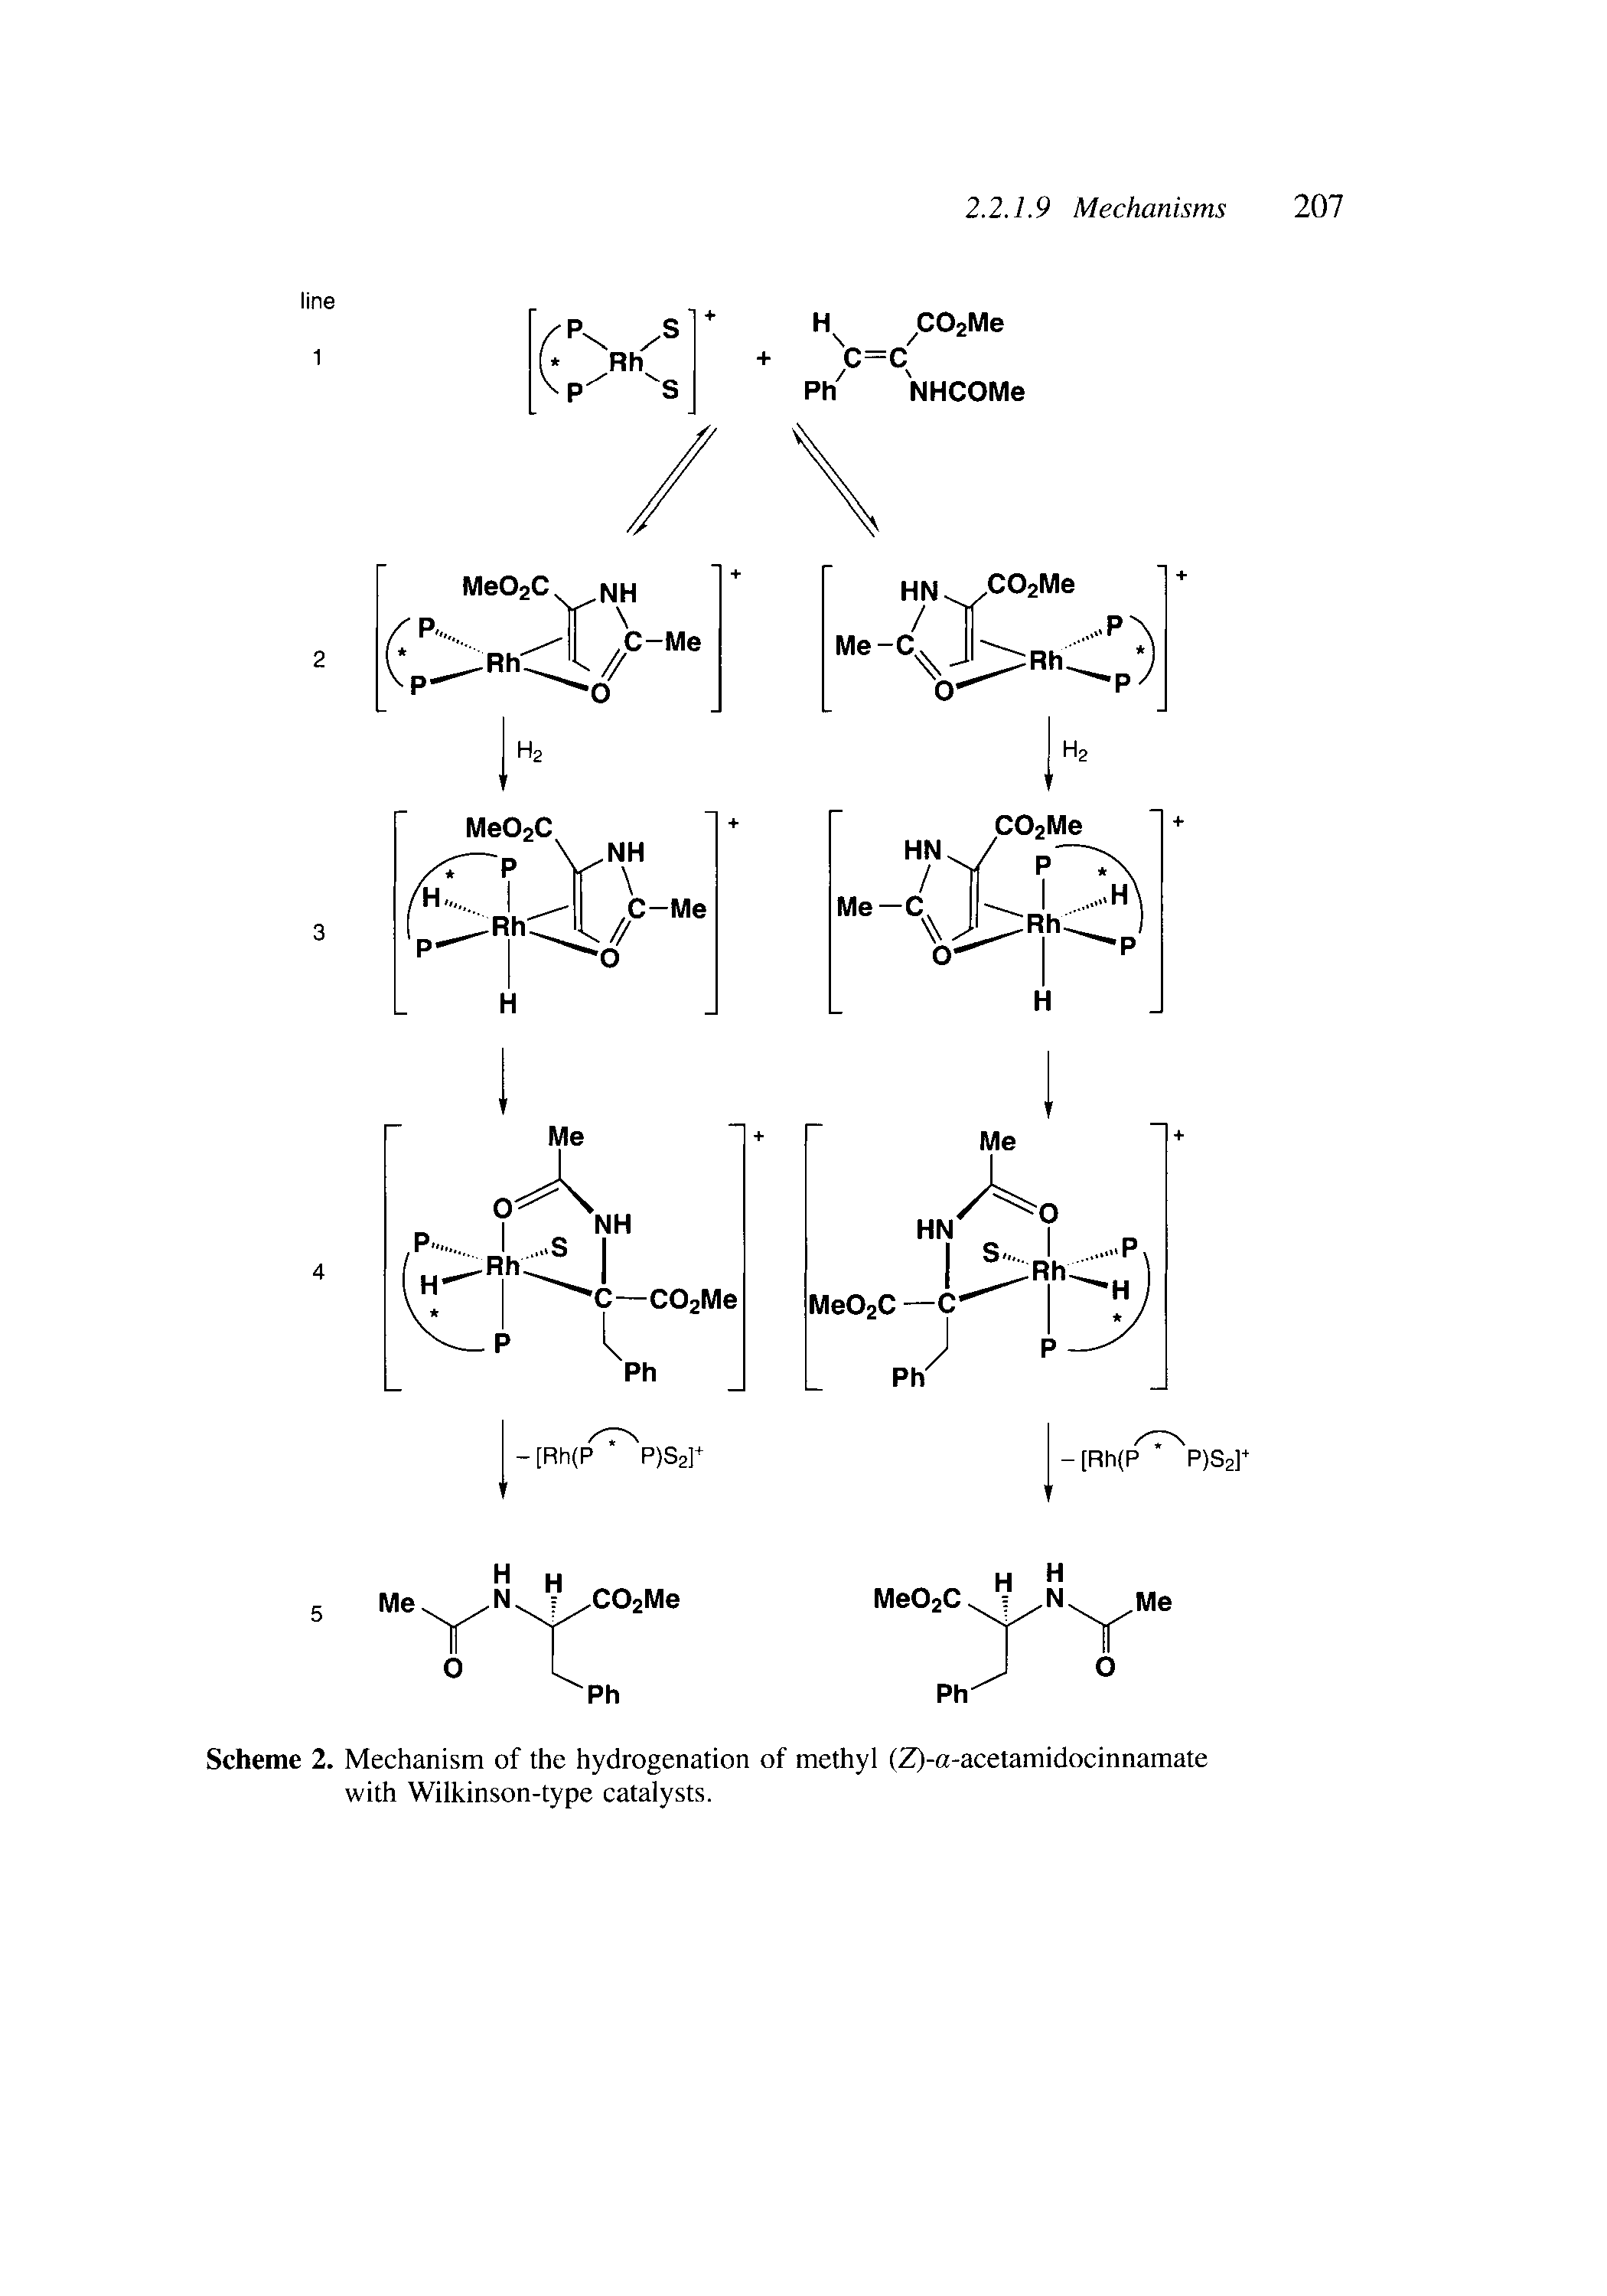 Scheme 2. Mechanism of the hydrogenation of methyl (Z)-a-acetamidocinnamate with Wilkinson-type catalysts.